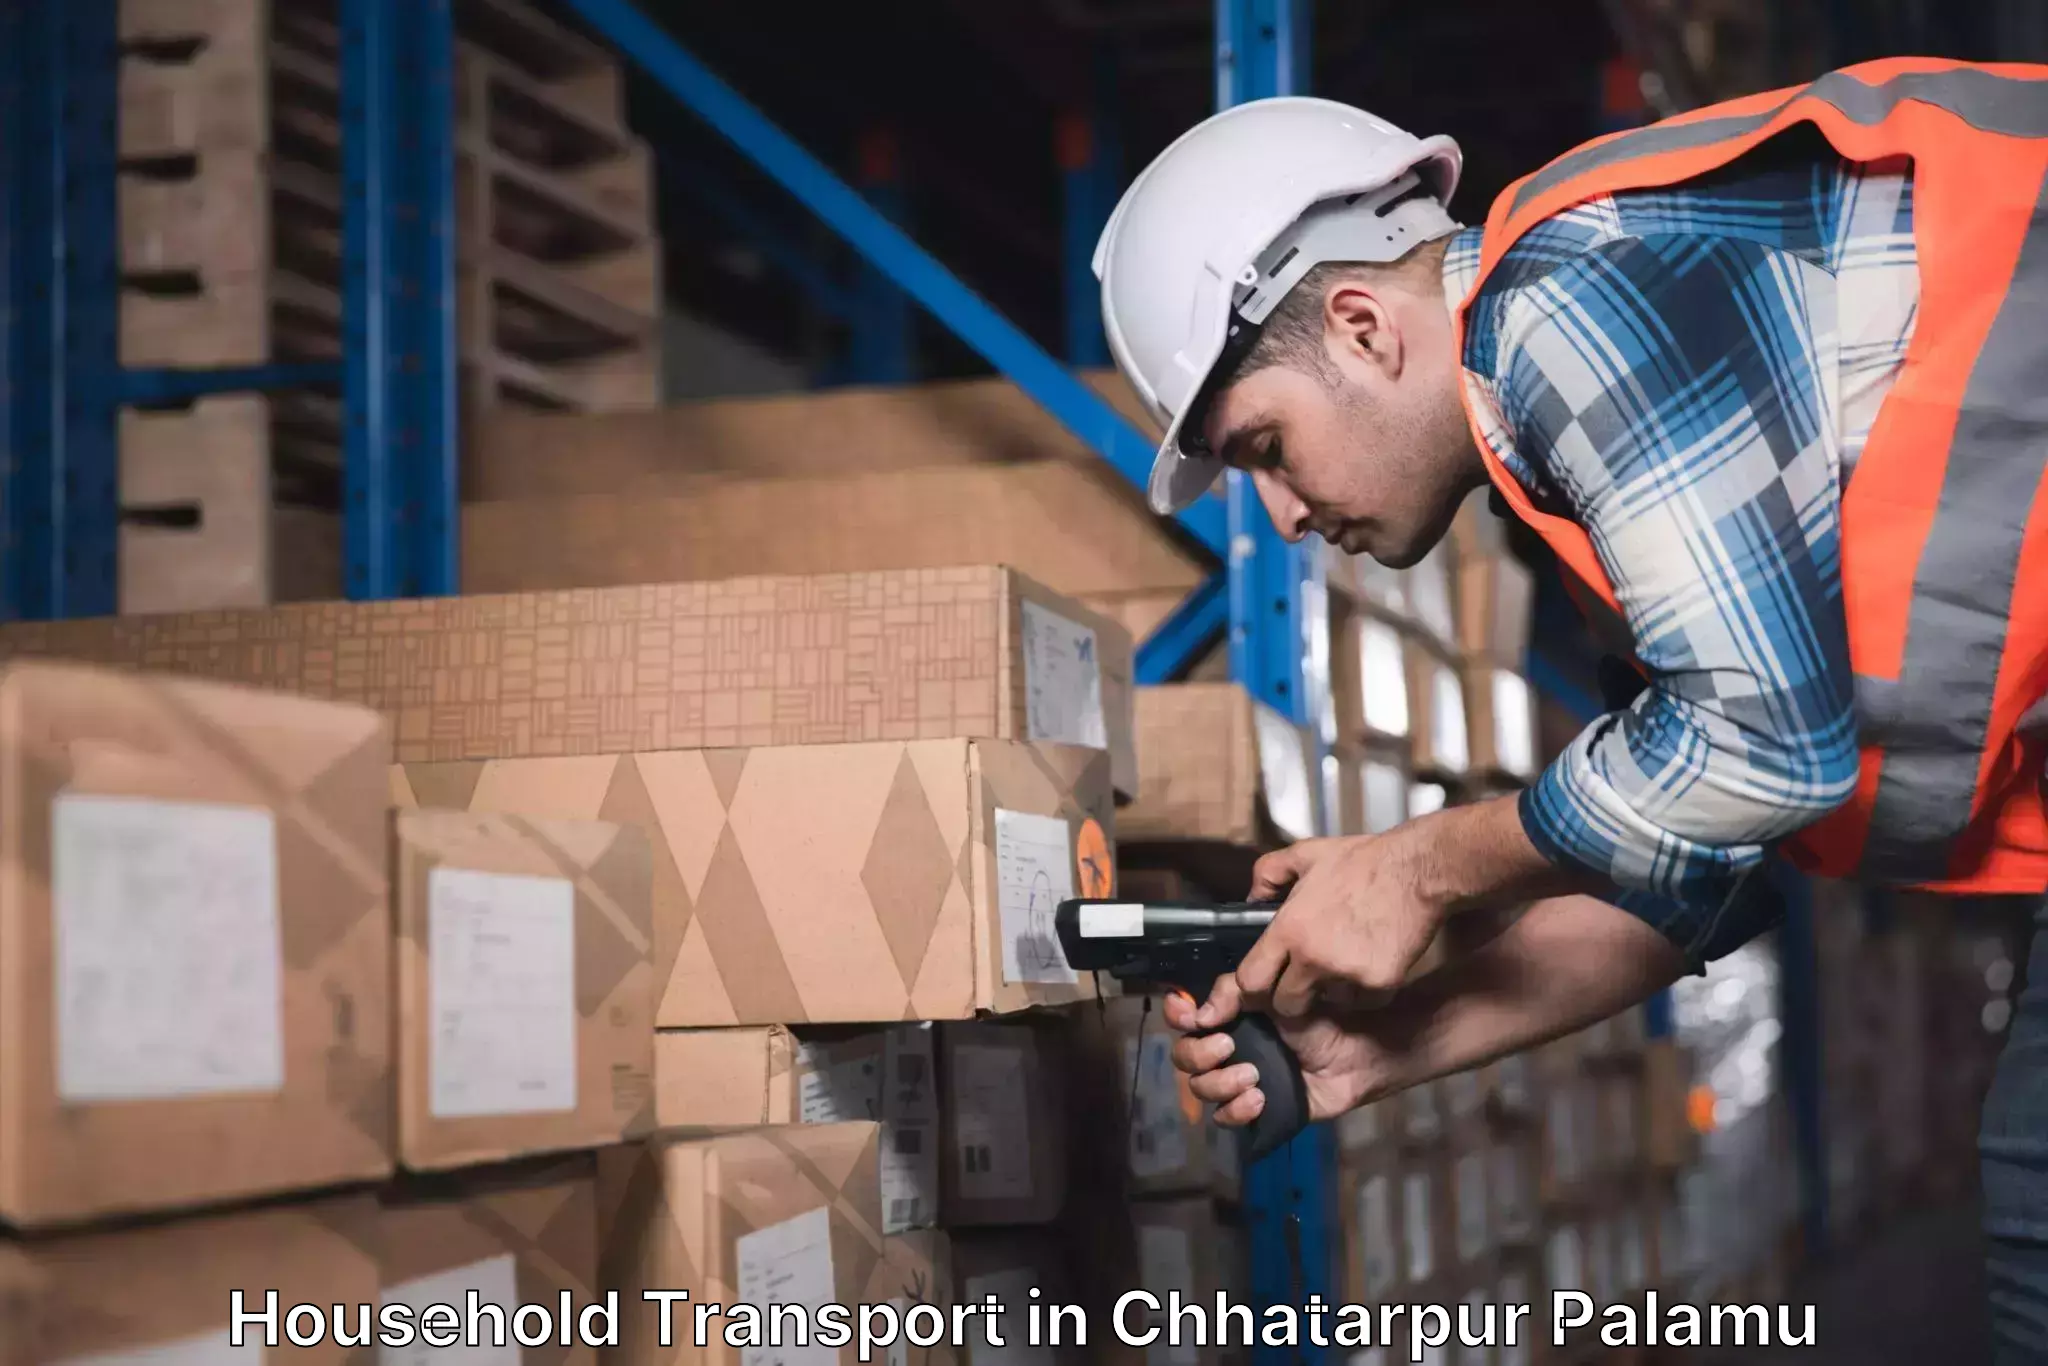 Household goods transporters in Chhatarpur Palamu